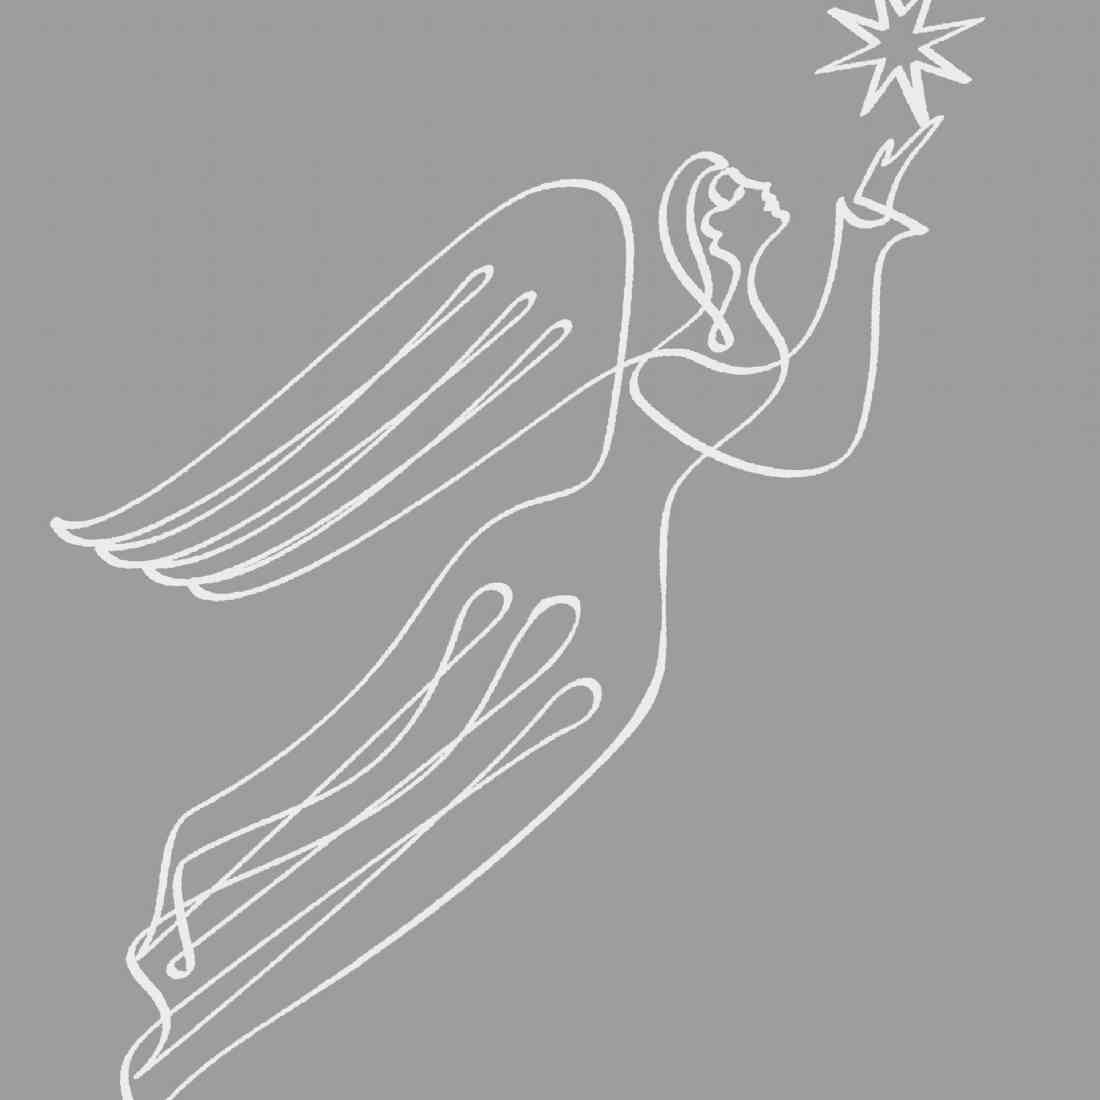 Paul Wearing: Waitrose 1 Christmas Angel